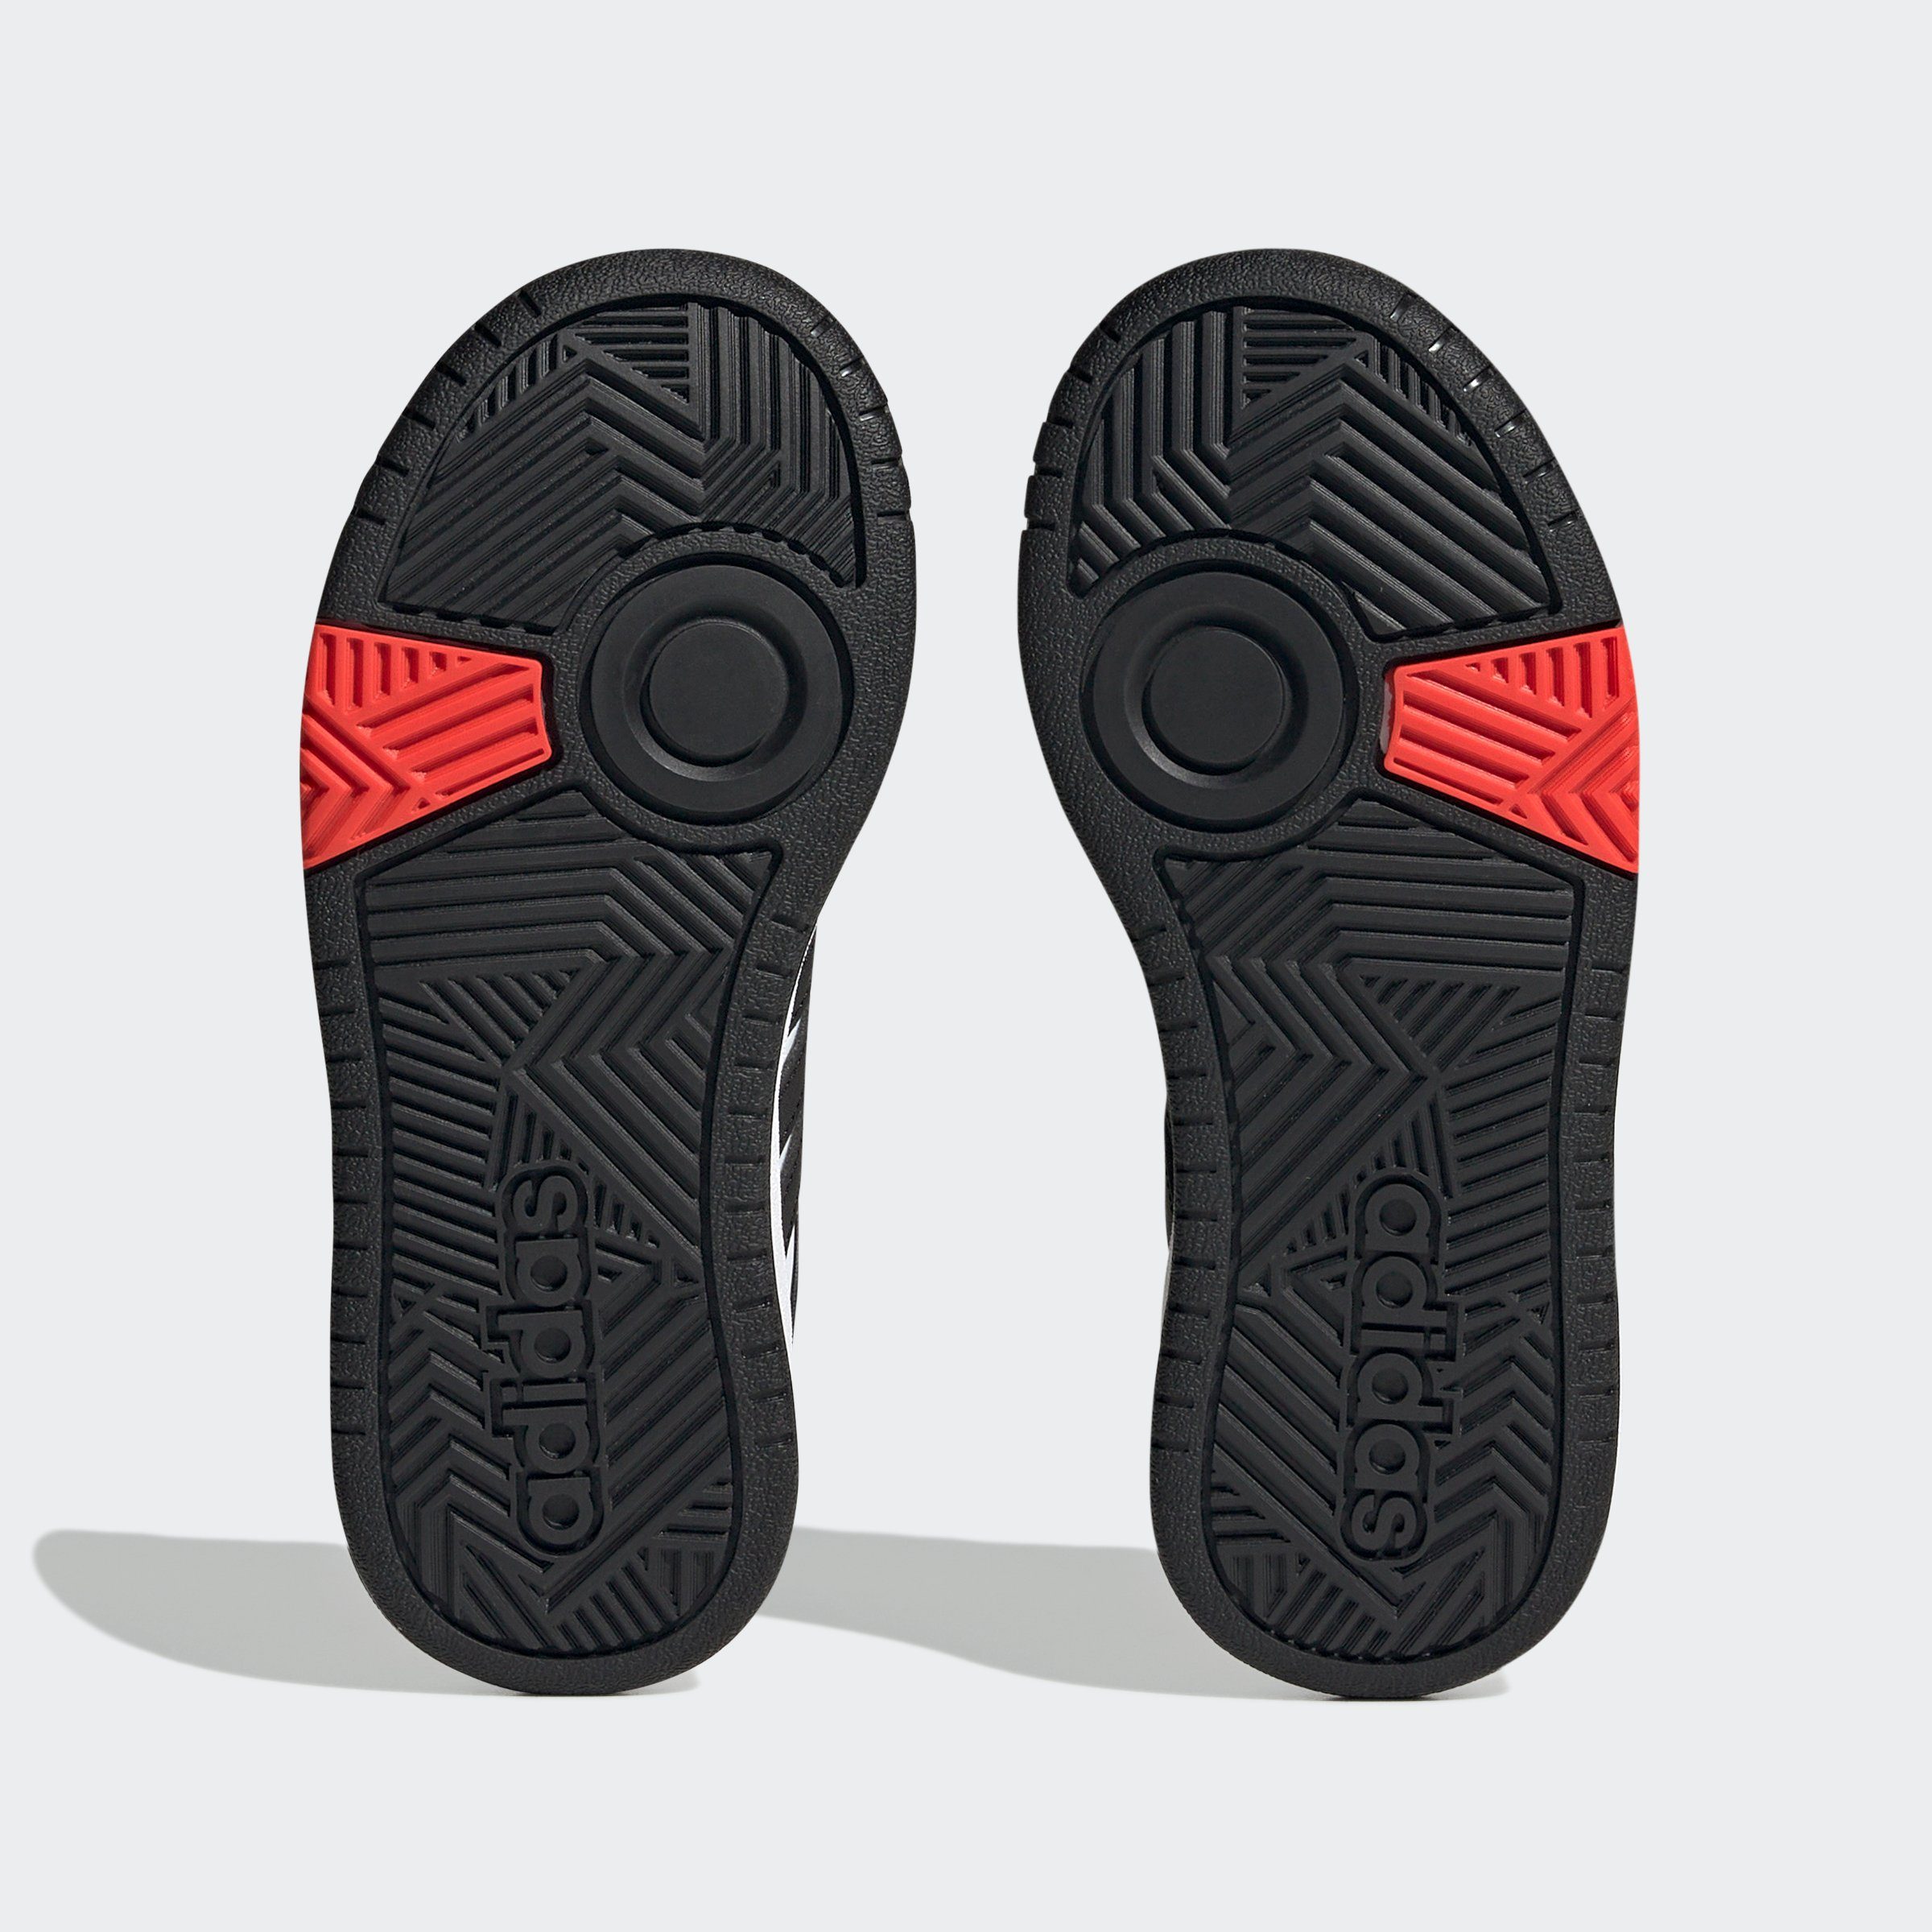 adidas / Red Core White Cloud / Bright Black Sneaker HOOPS Sportswear